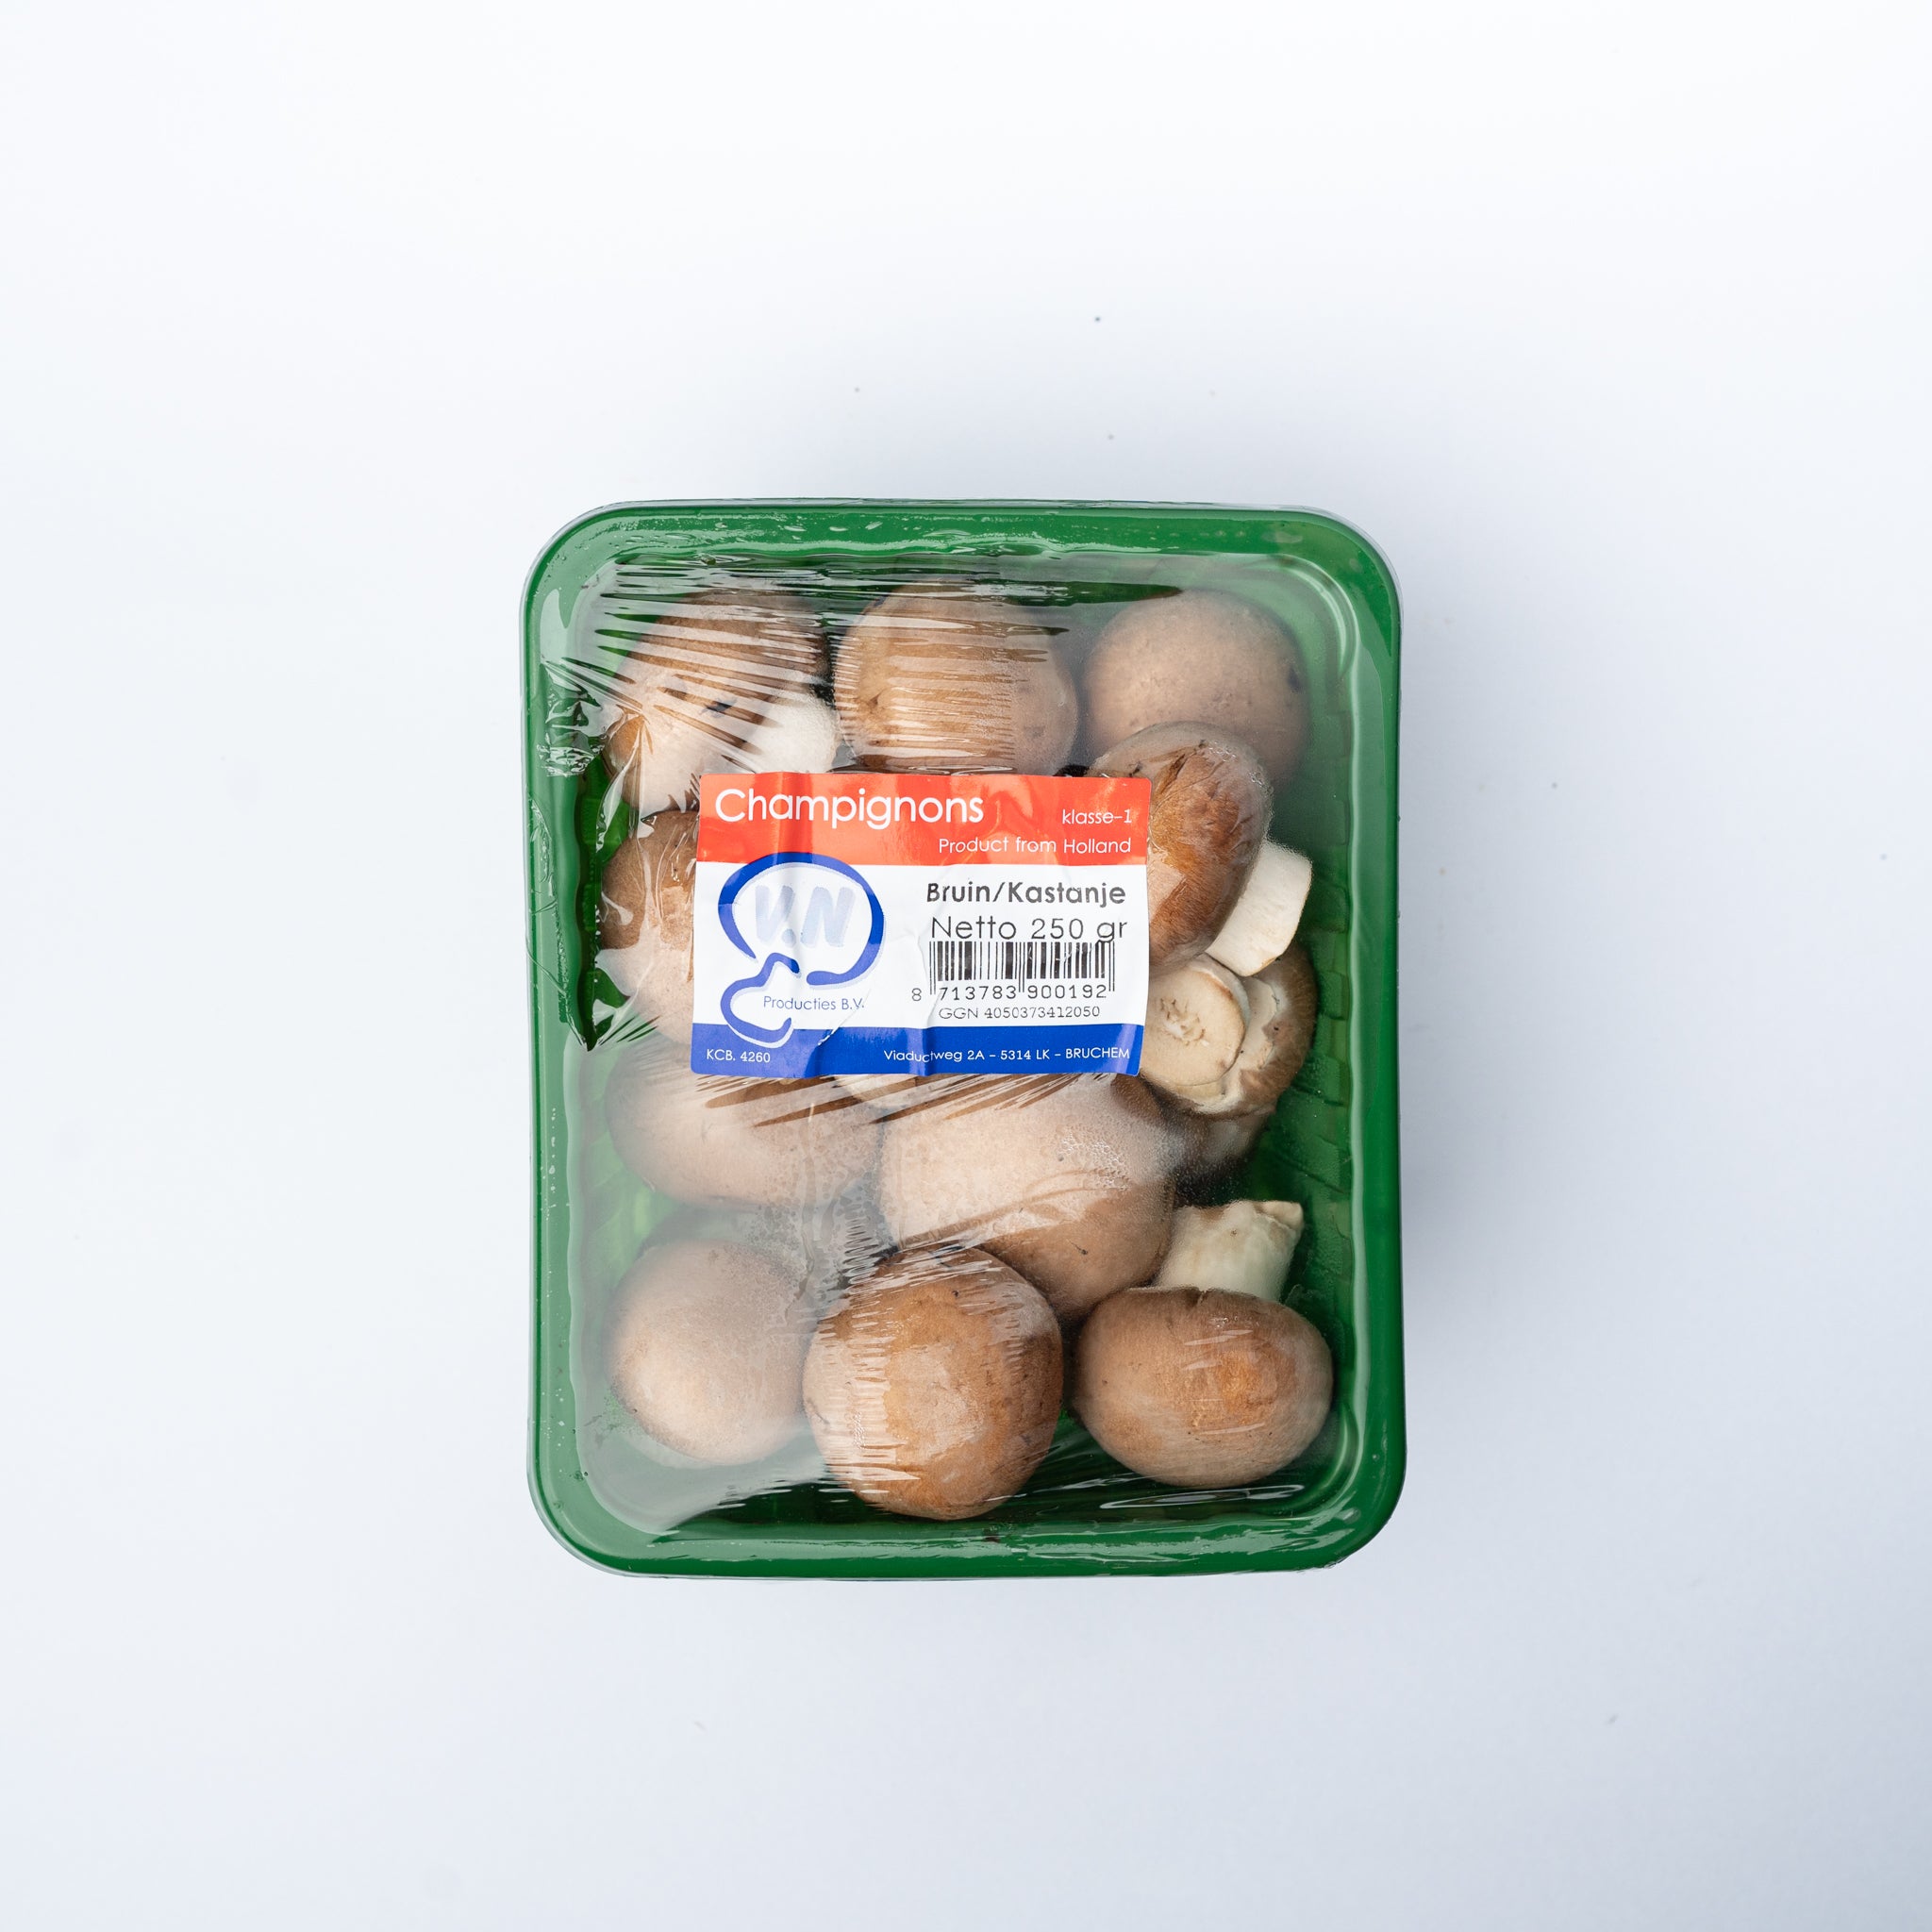 A plastic box of brown mushrooms.